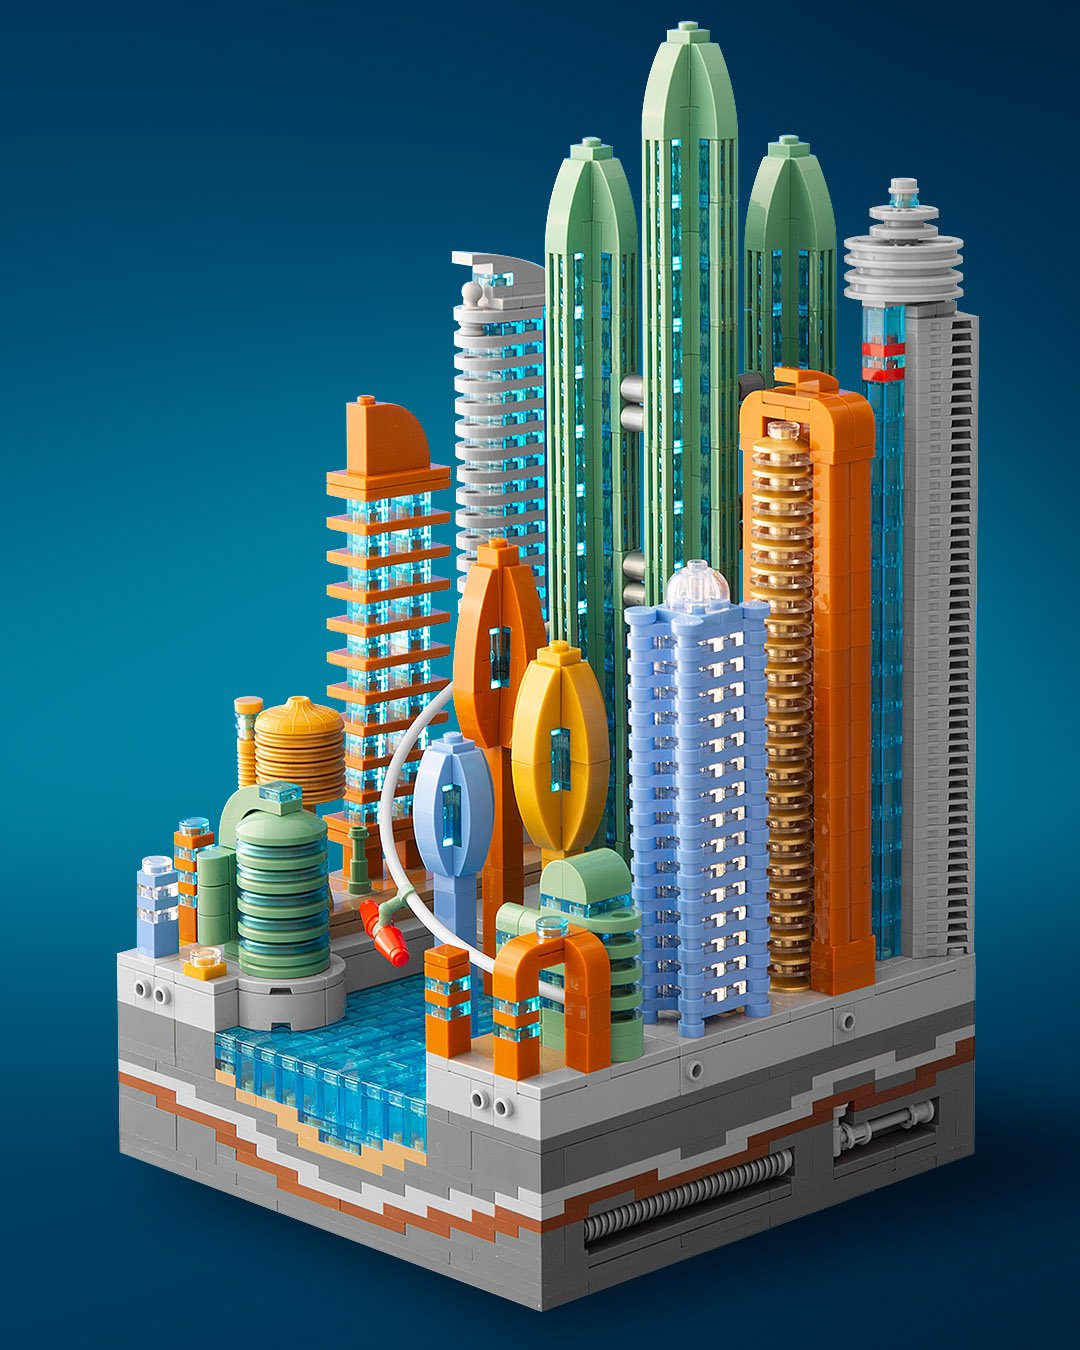 Custom Micro-Scale LEGO City! Bricksie Habitat 